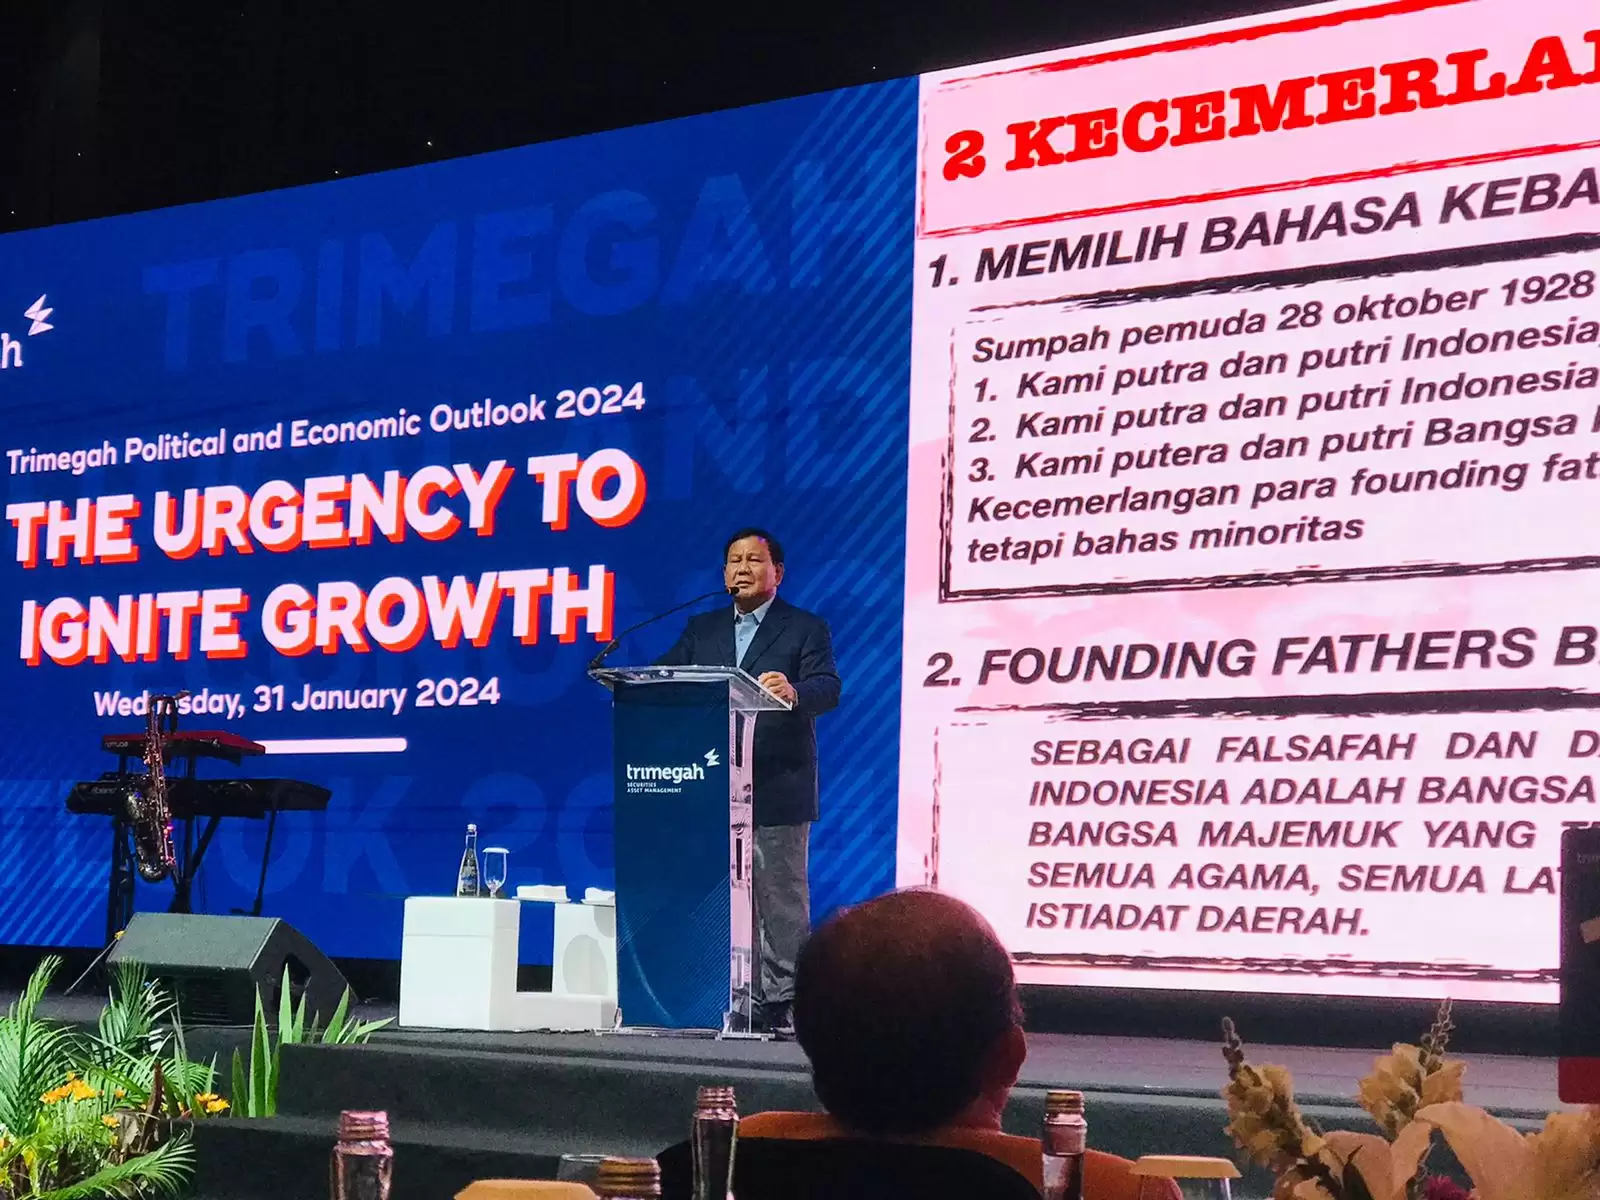 Calon presiden no urut 02 Prabowo Subianto dalam acara The Political Outlook and Economic Outlook 2024 "The urgency to ignite growth" di Ballroom 1 The Ritz Carlton, Jakarta, Rabu (31/1). (Foto: MI/Zefry)